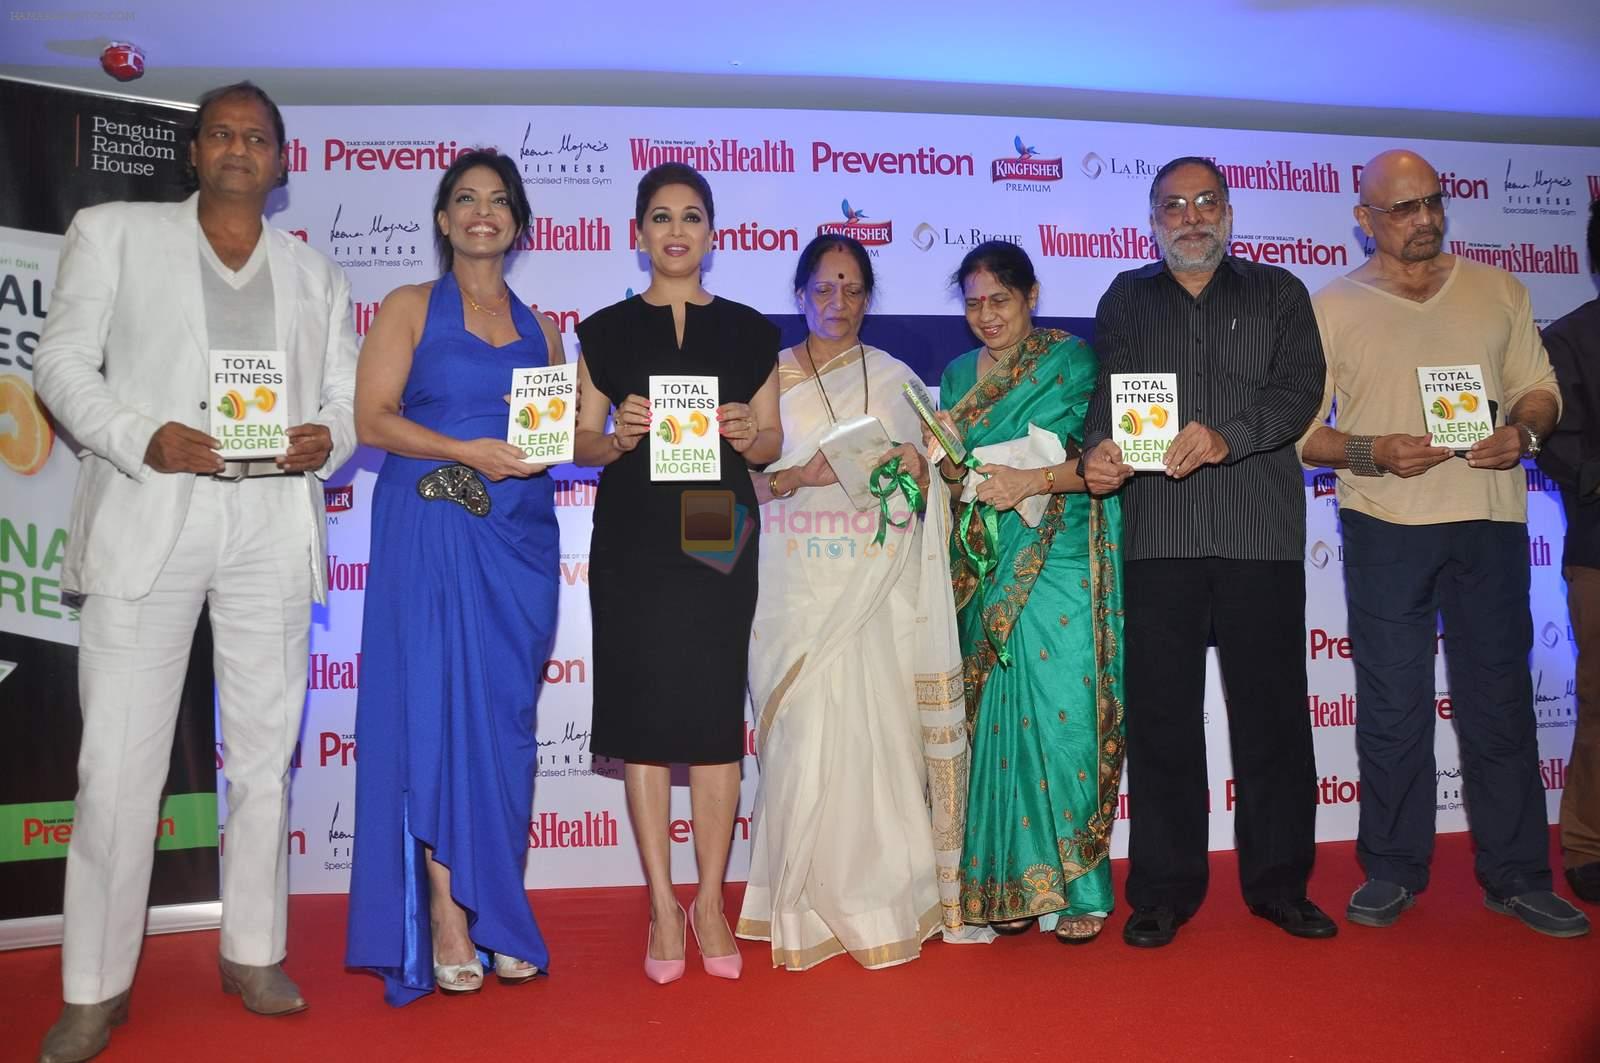 Madhuri Dixit at the launch of Leena Mogre fitness book in Bandra, Mumbai on 30th April 2015